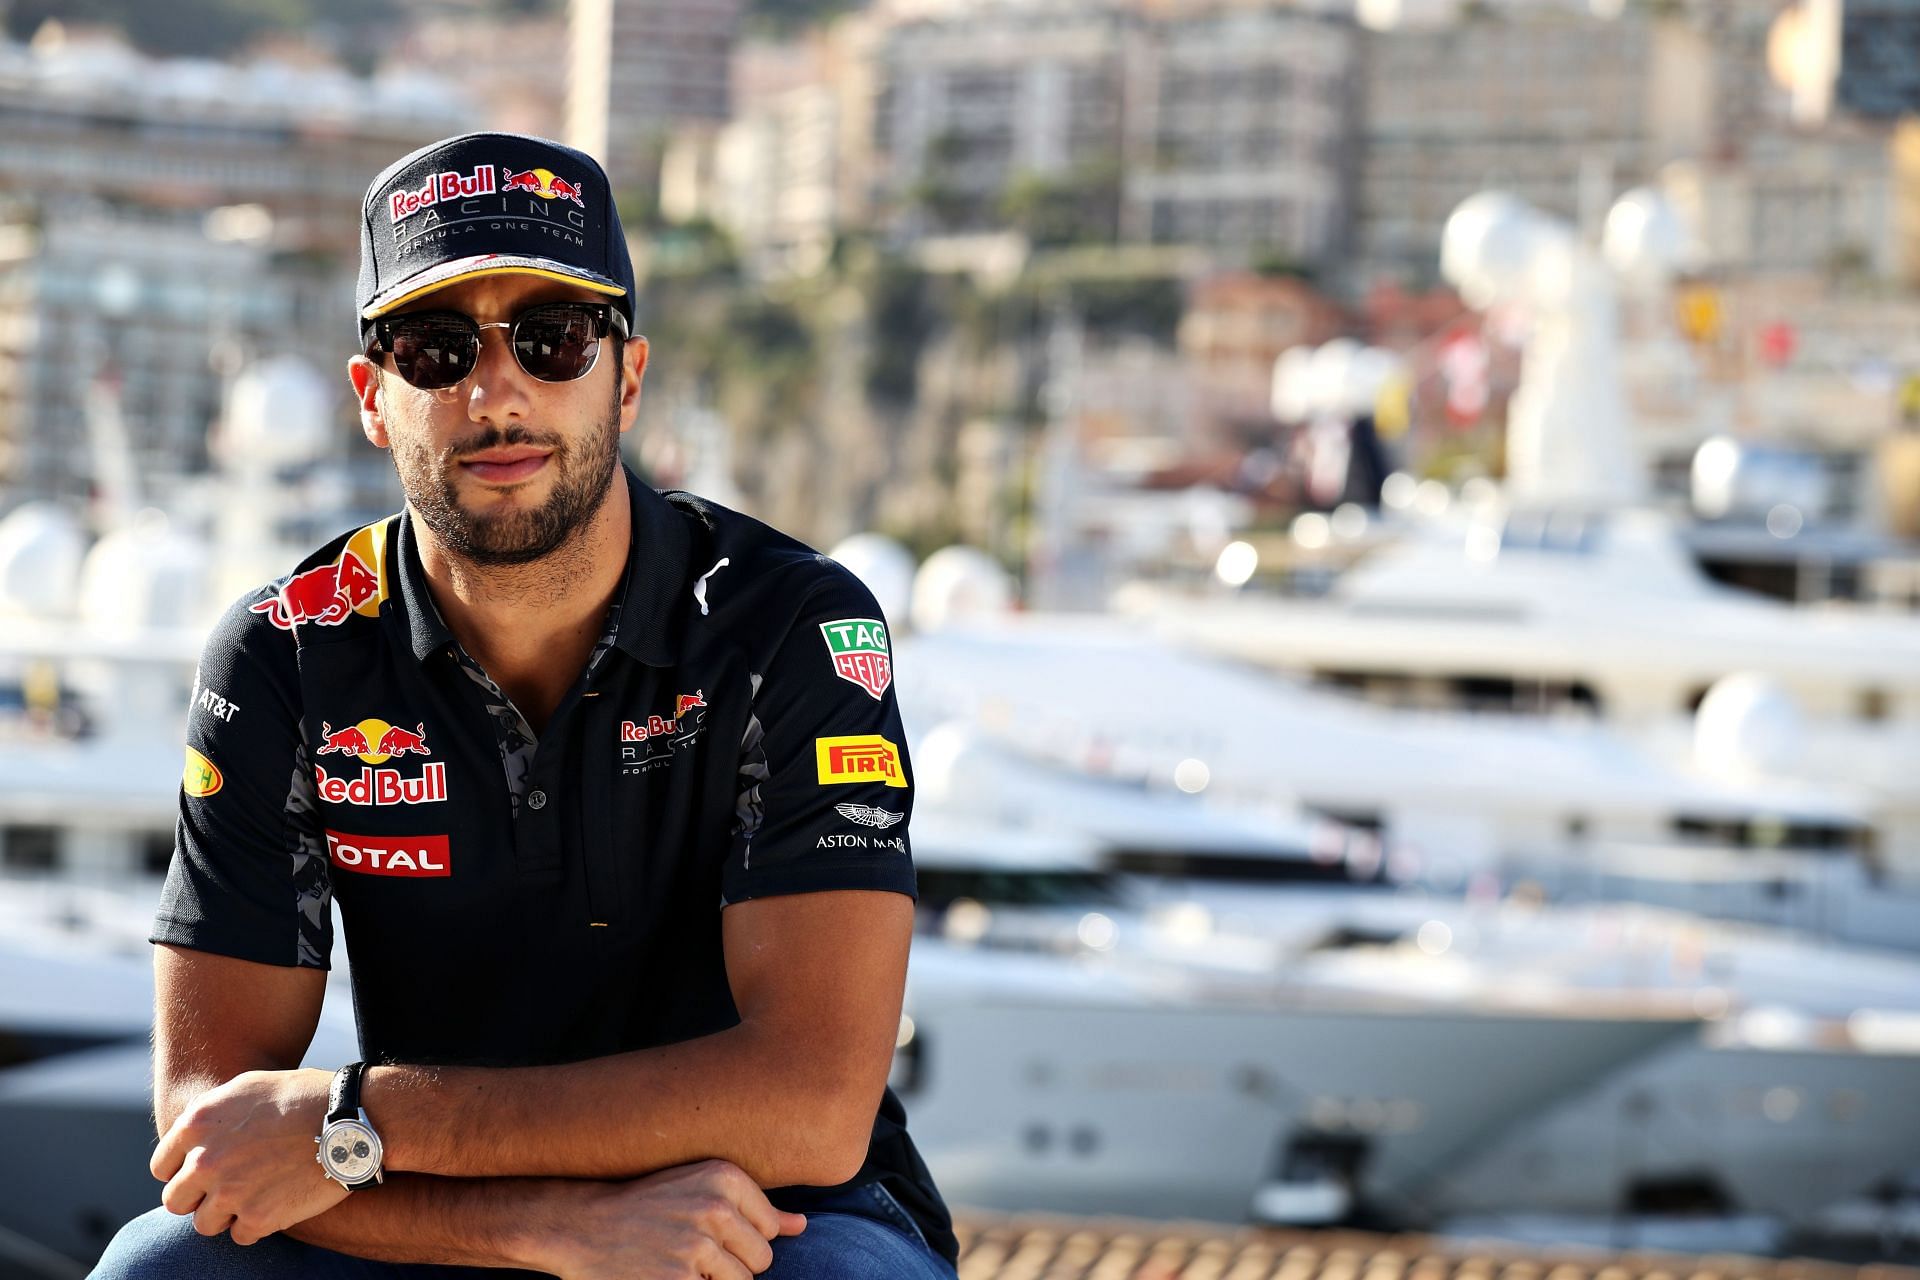 F1 Monaco GP 2018 retrospective: How Ricciardo banished his '16 ghosts